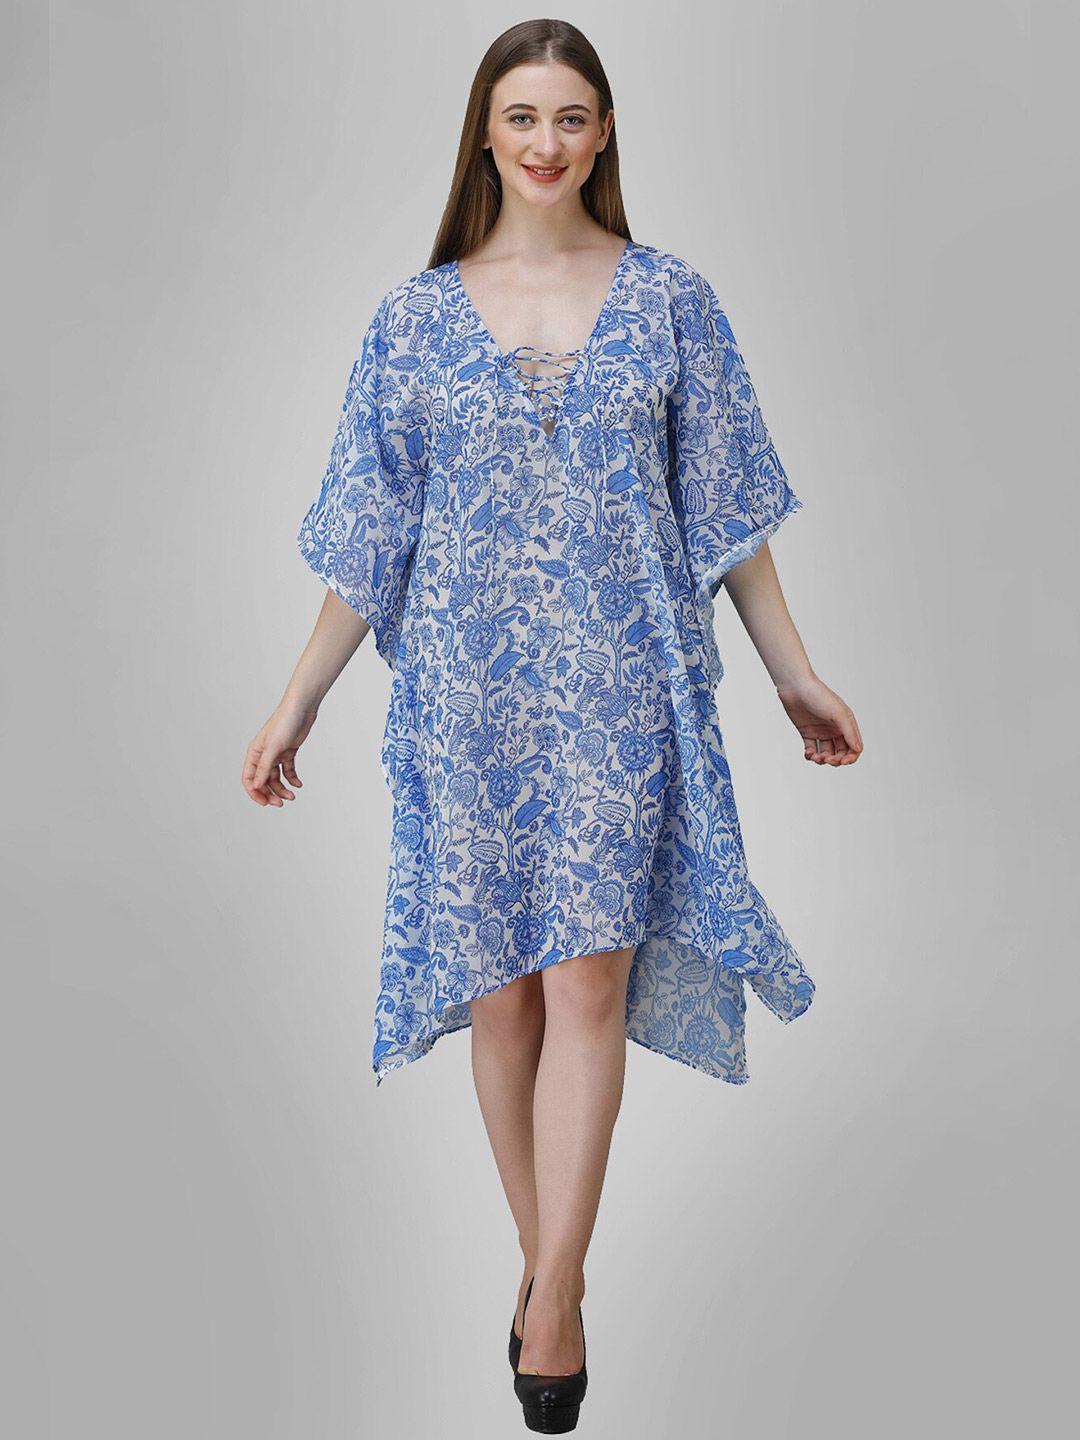 rajoria instyle women blue floral georgette ethnic kaftan dress